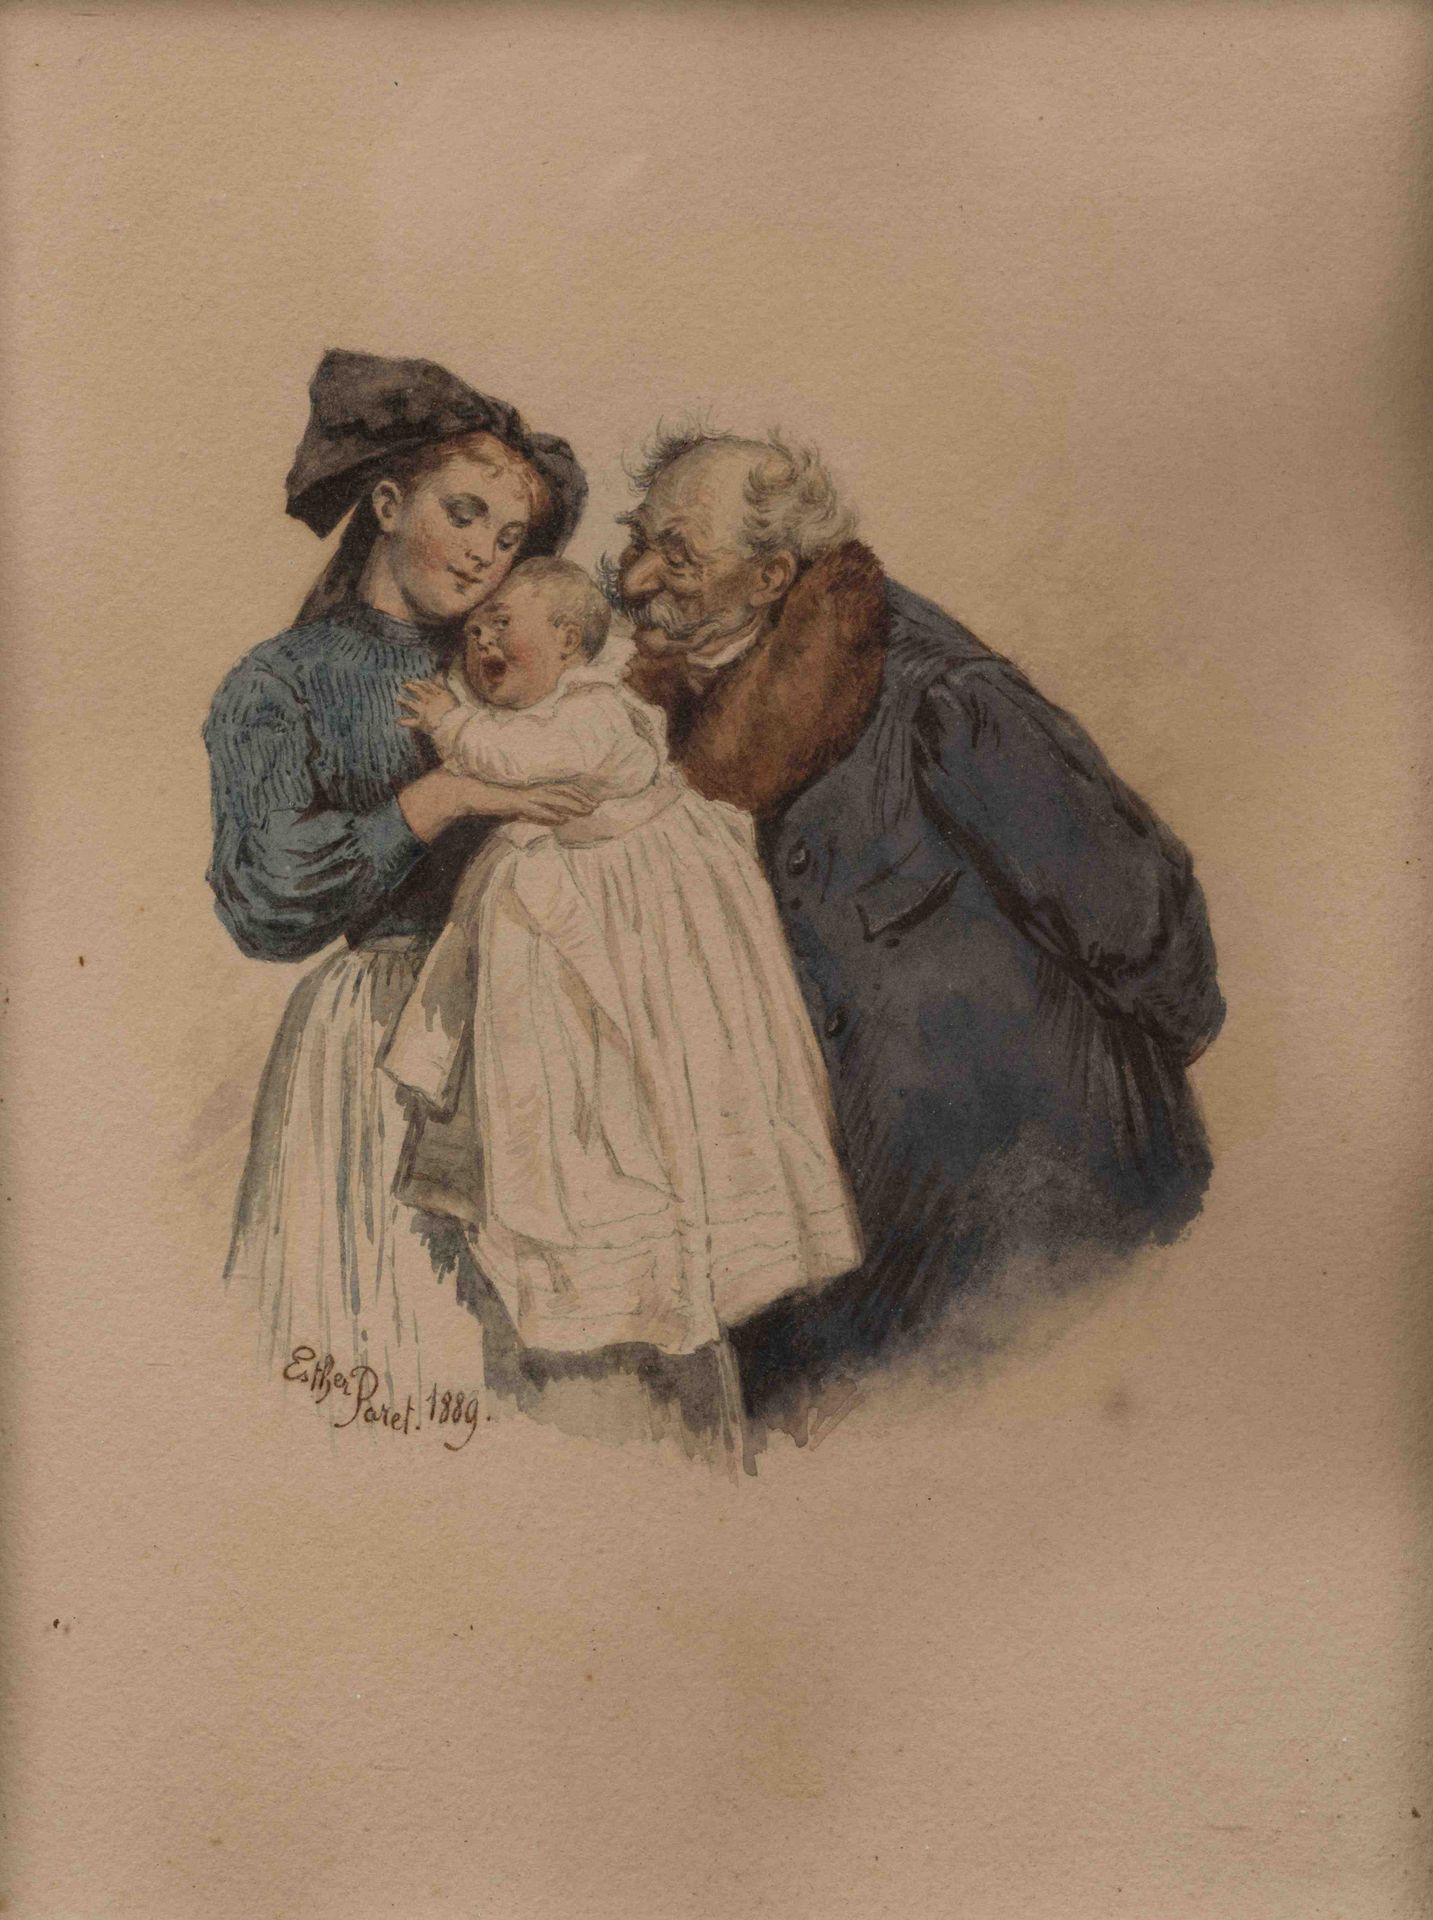 Null Esther PARET (siglo XIX) según Adrien MARIE (1848-1891)

"El espantapájaros&hellip;